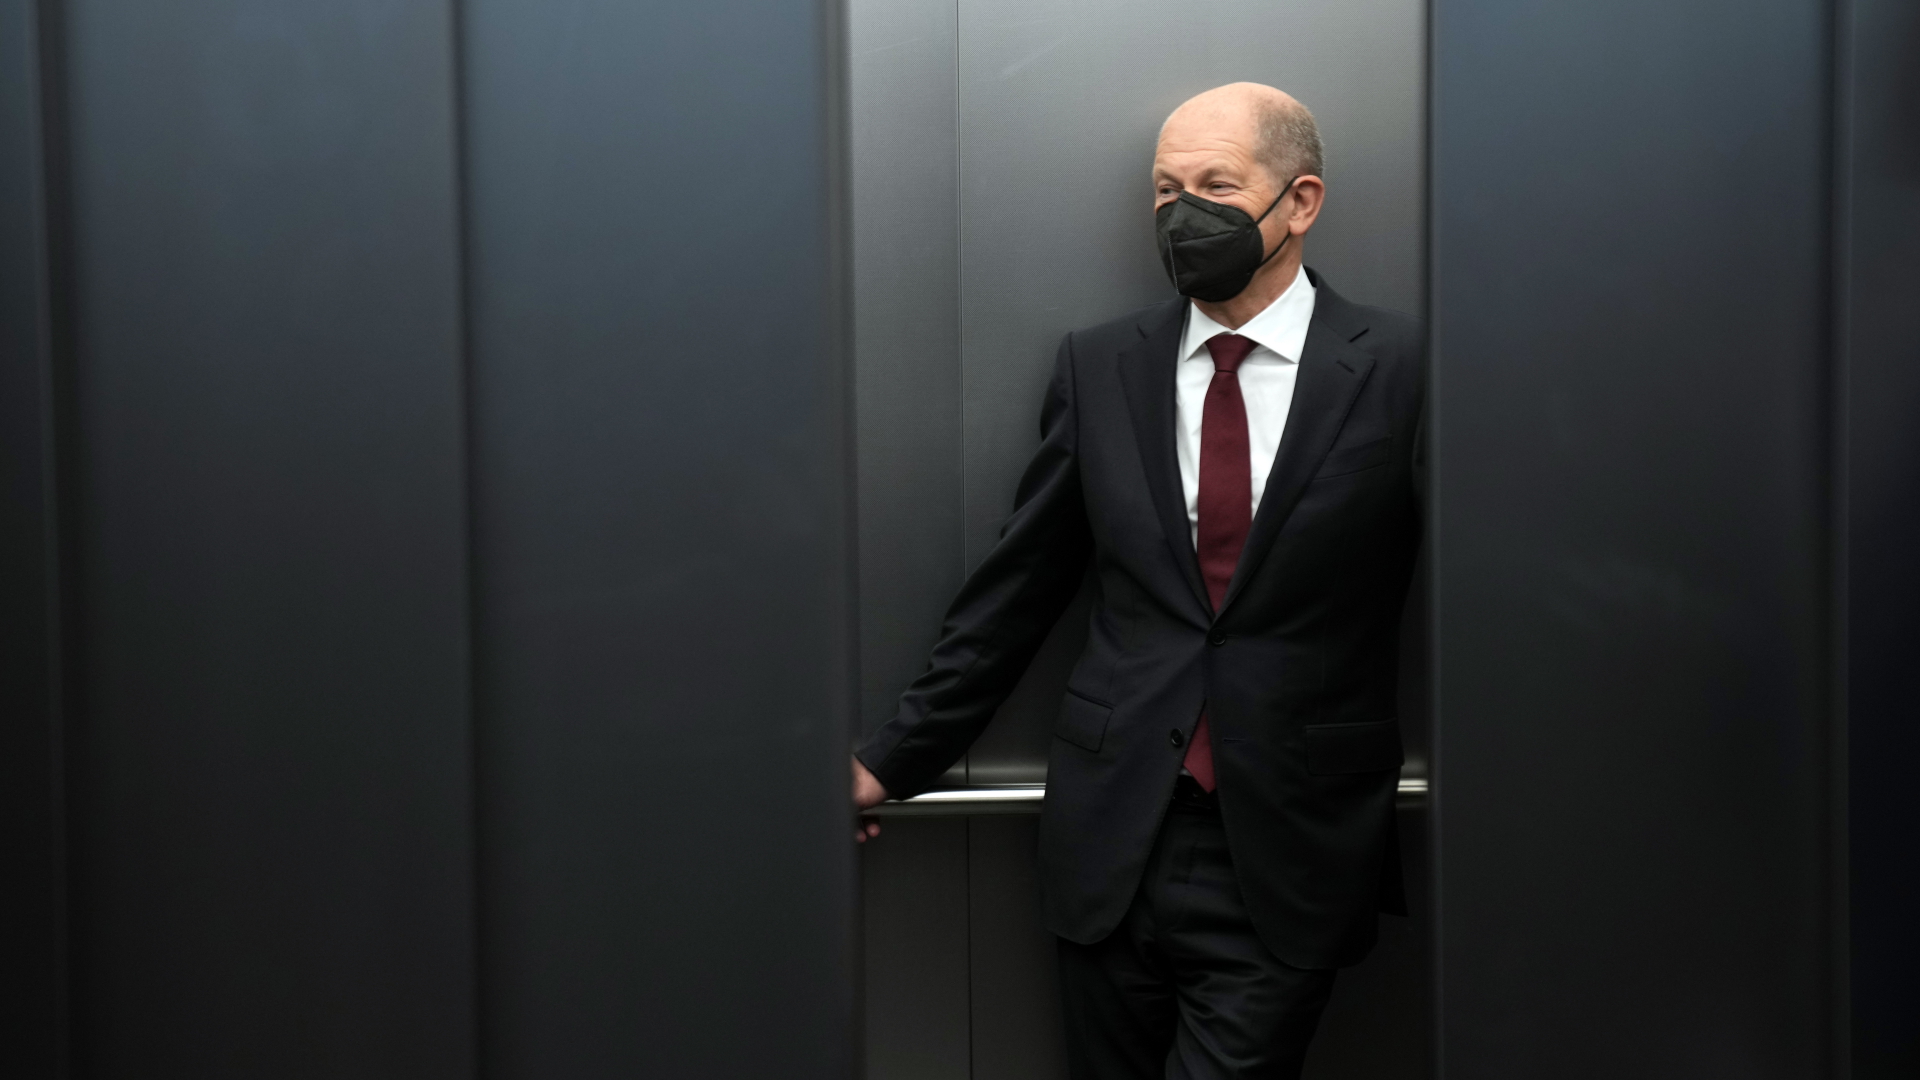 SPD-Kanzlerkandidat Scholz in einem Fahrstuhl | dpa